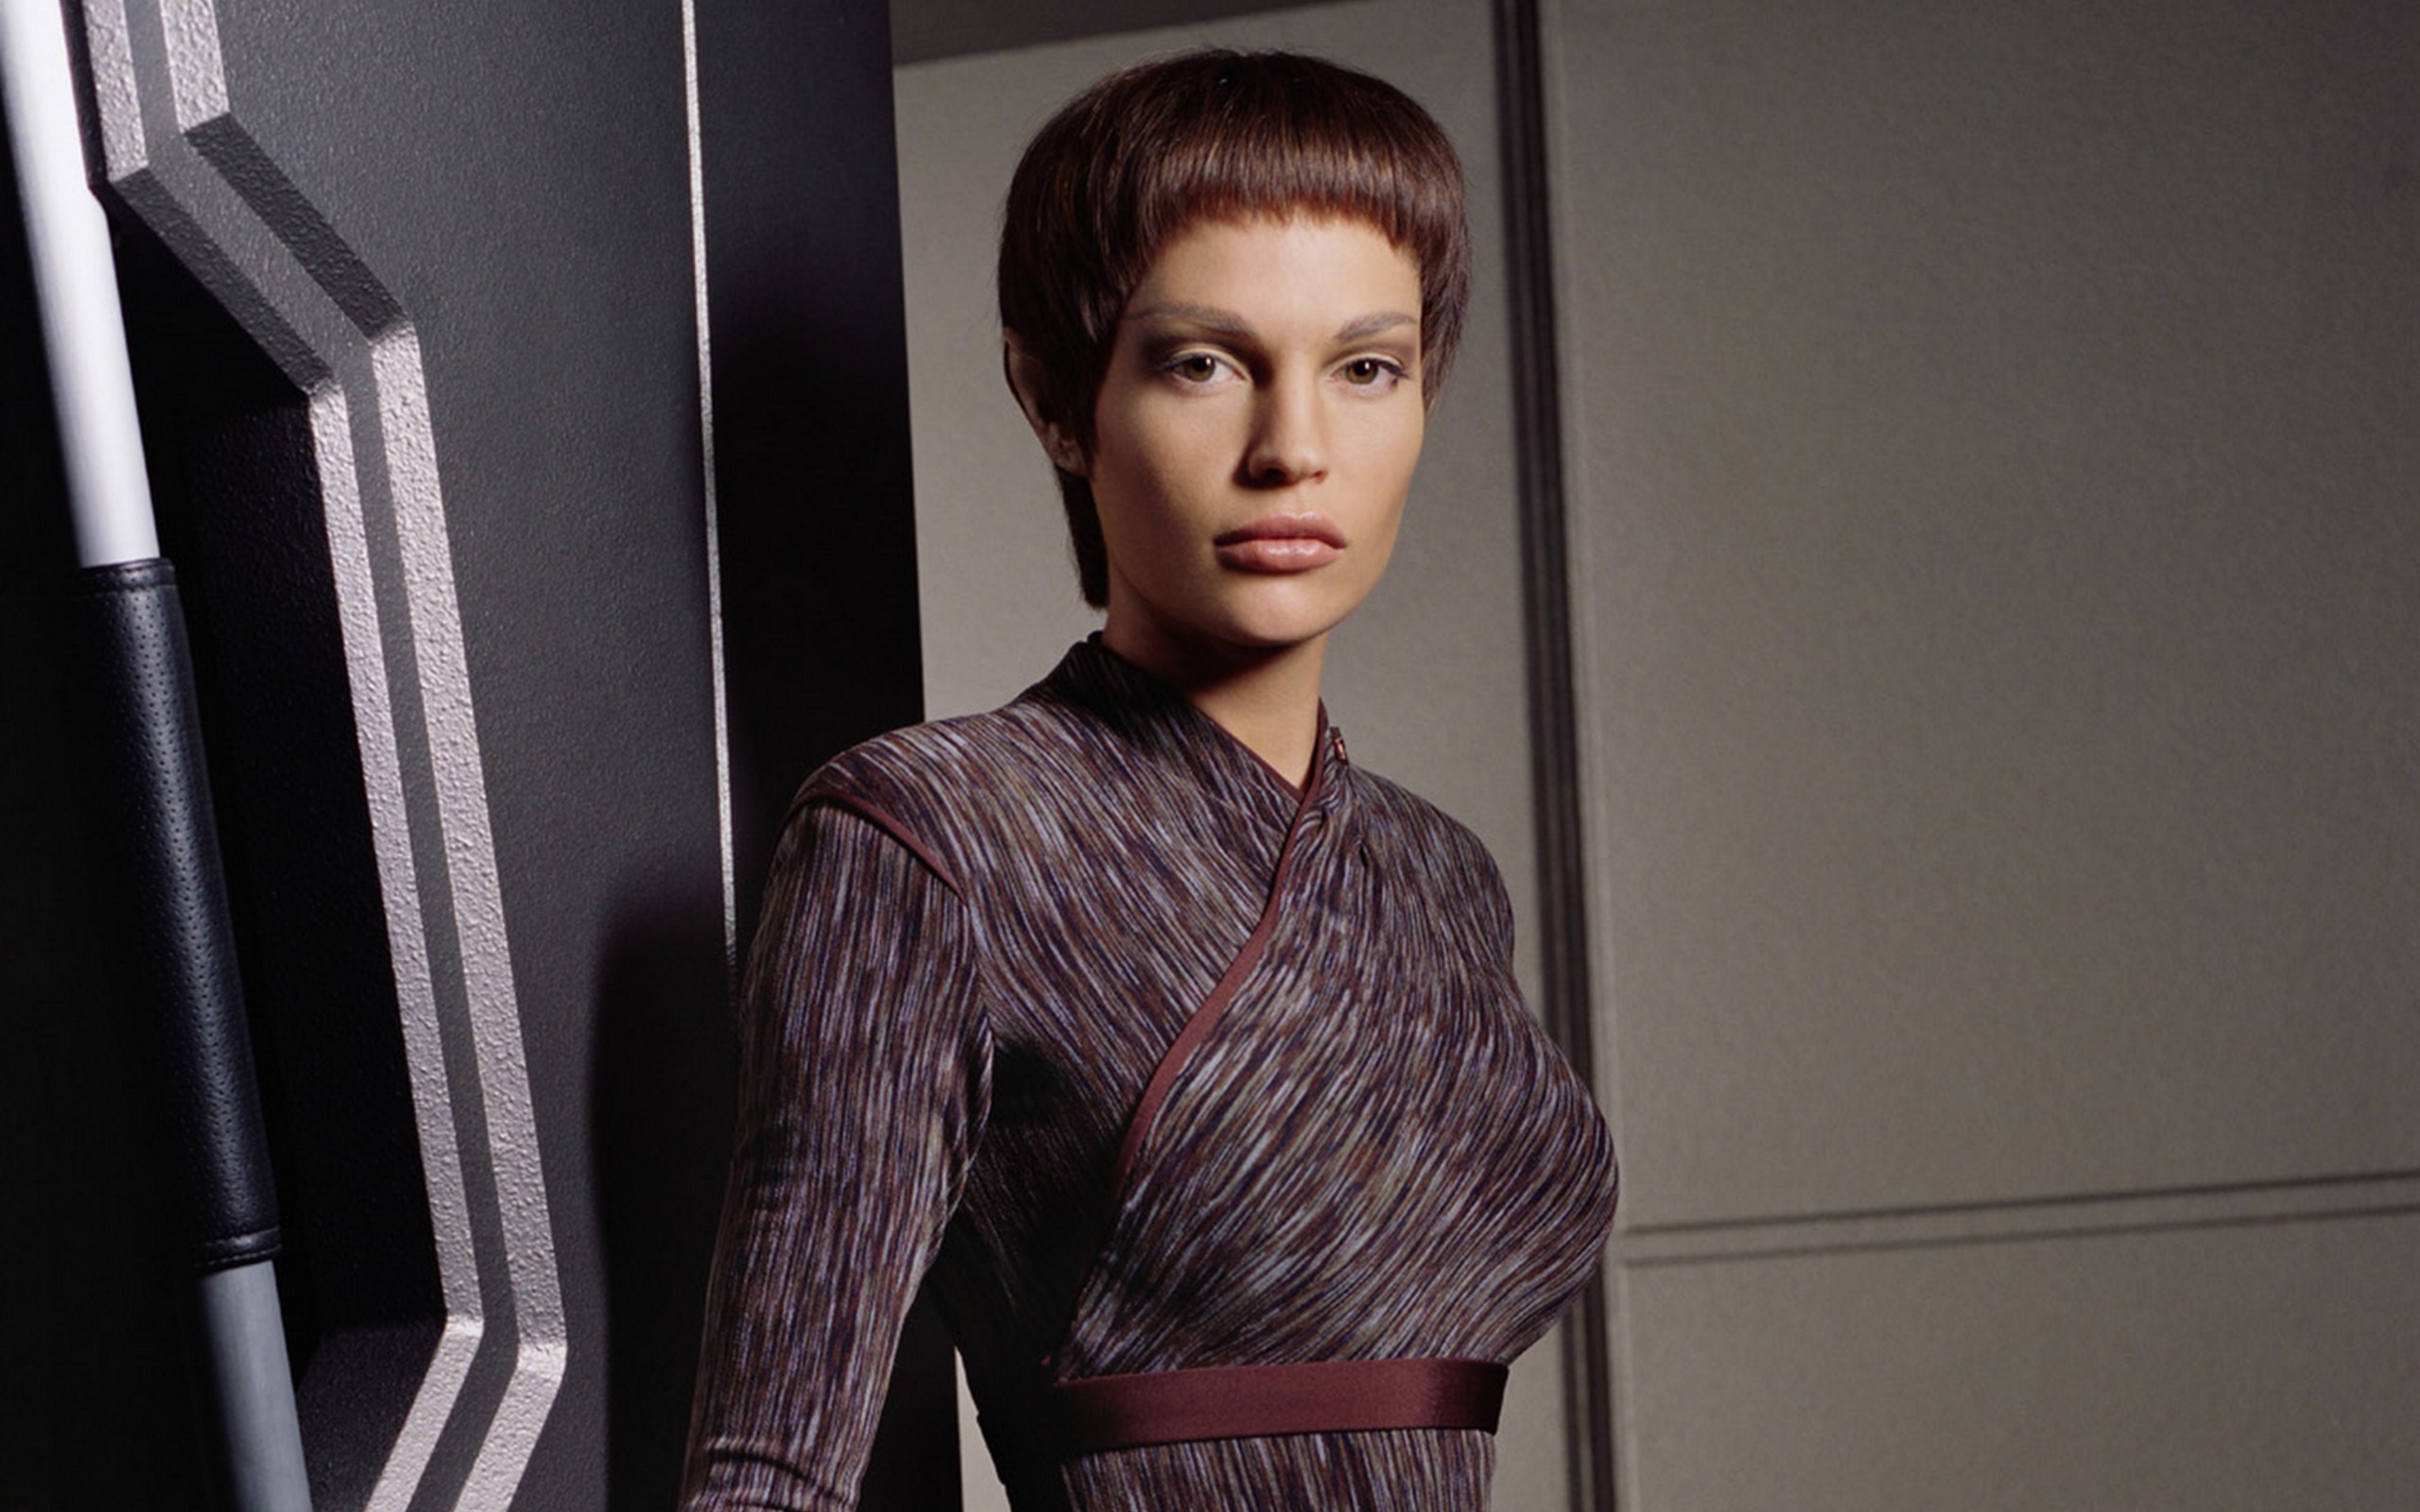 TV Show Star Trek: Enterprise HD Wallpaper | Background Image